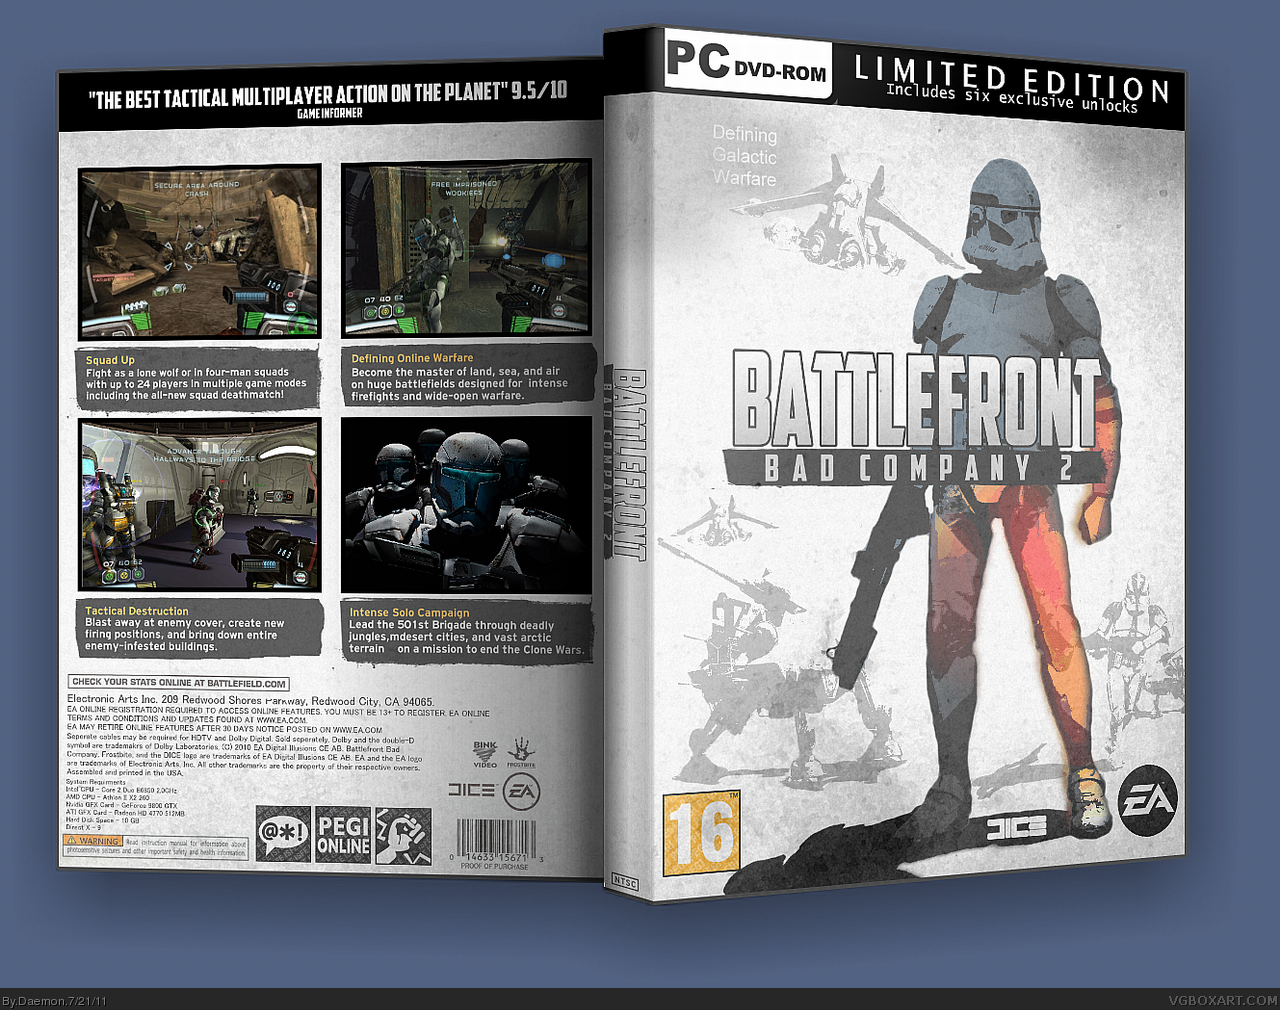 Battlefront: Bad Company 2 box cover